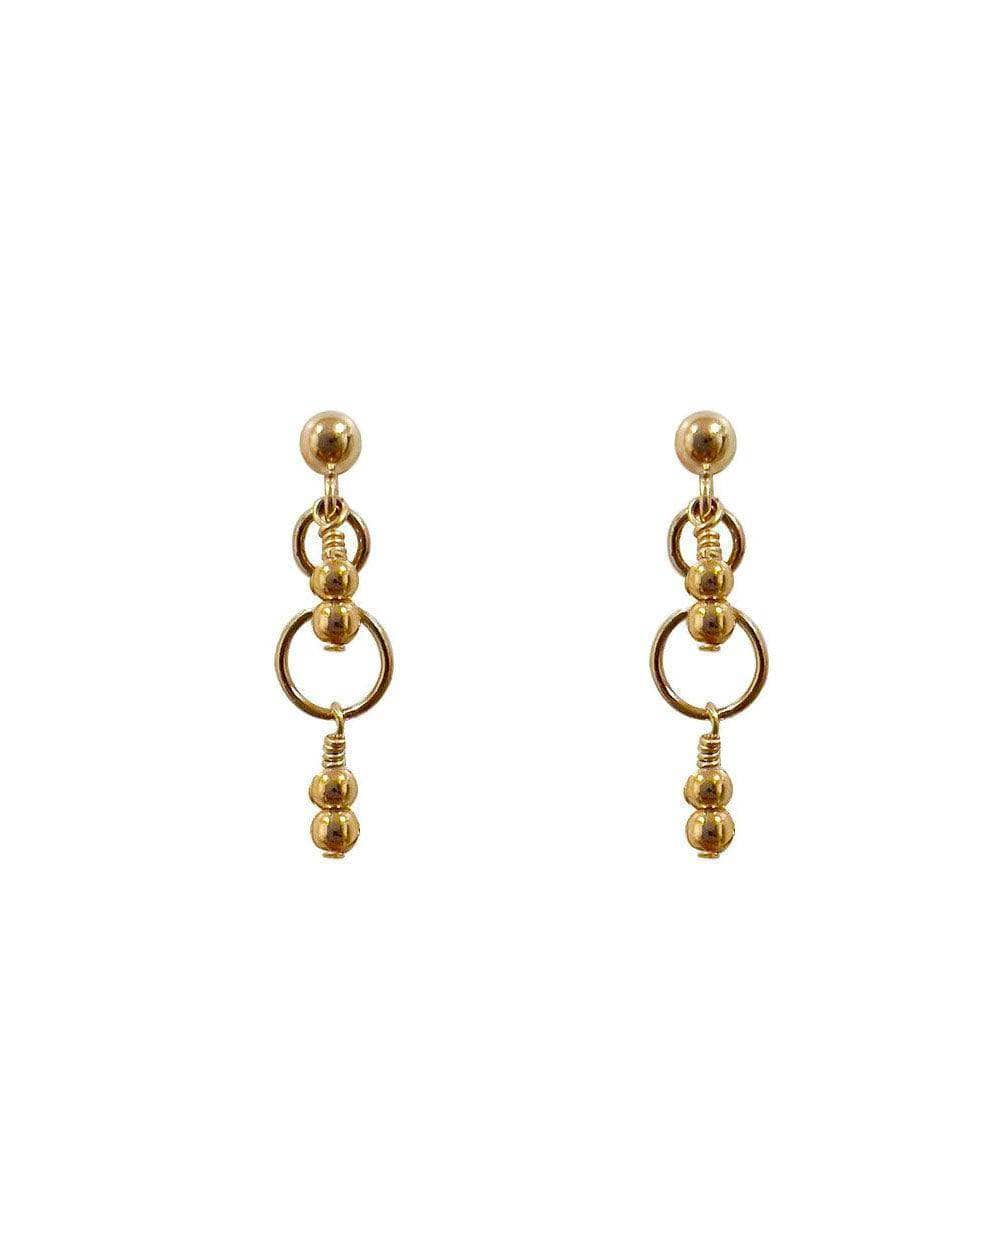 Kimberly Beads Stud earrings